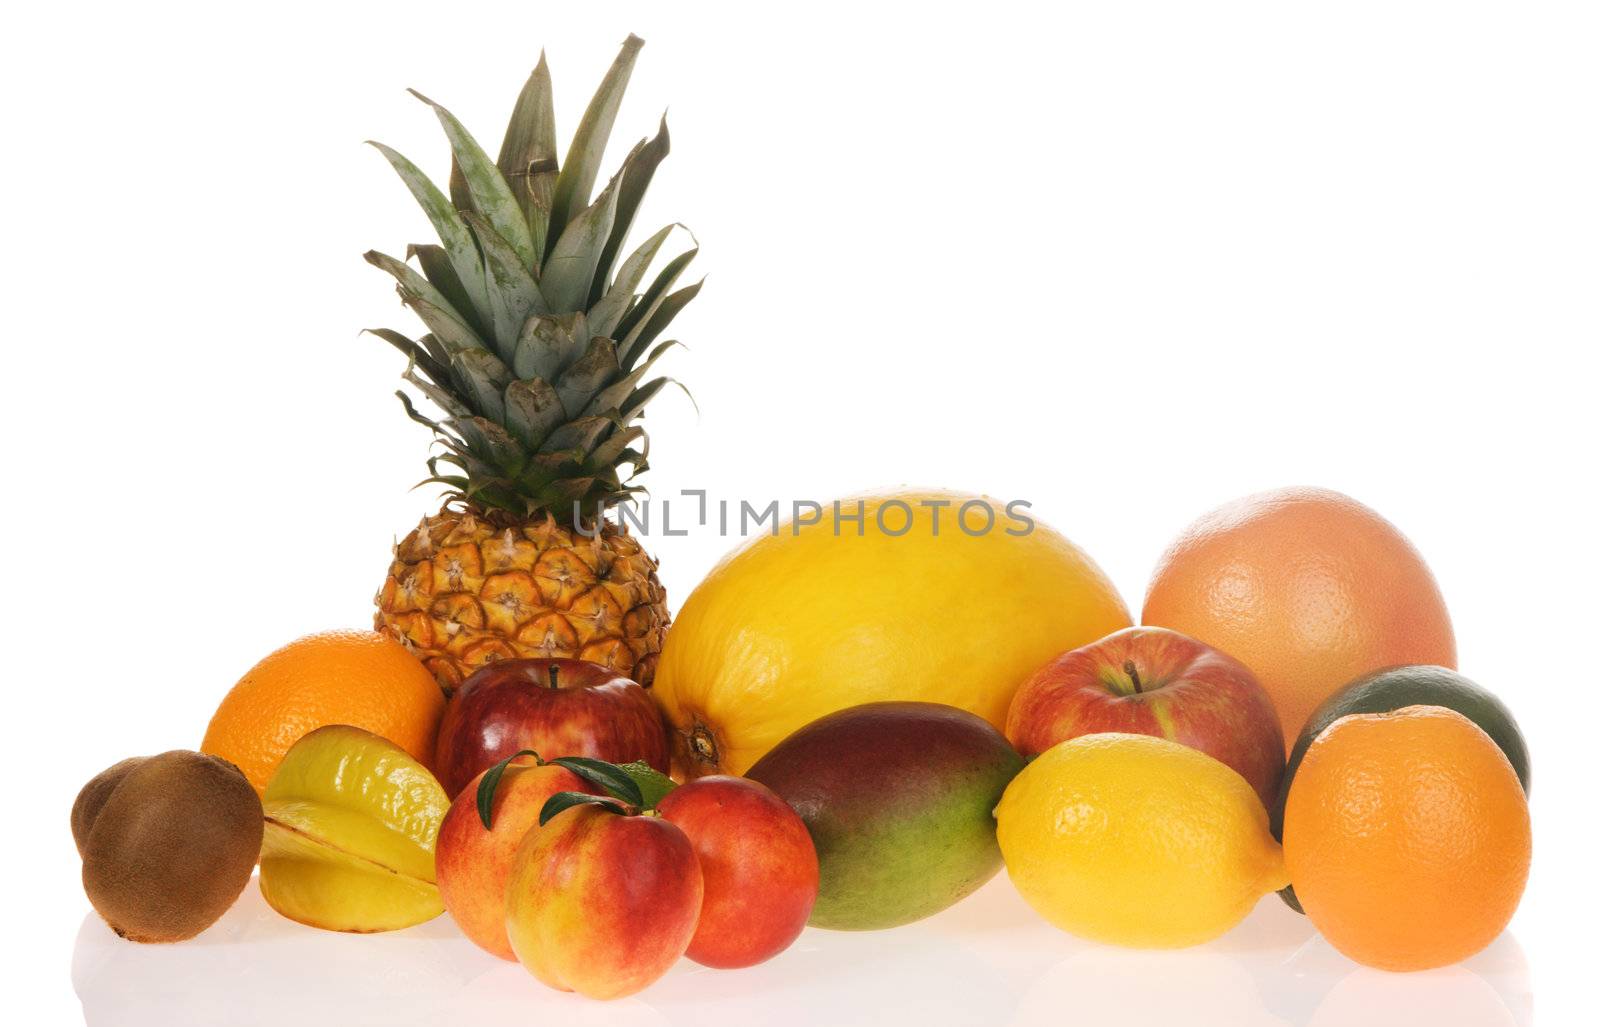 Assortment of fresh fruits on white background 